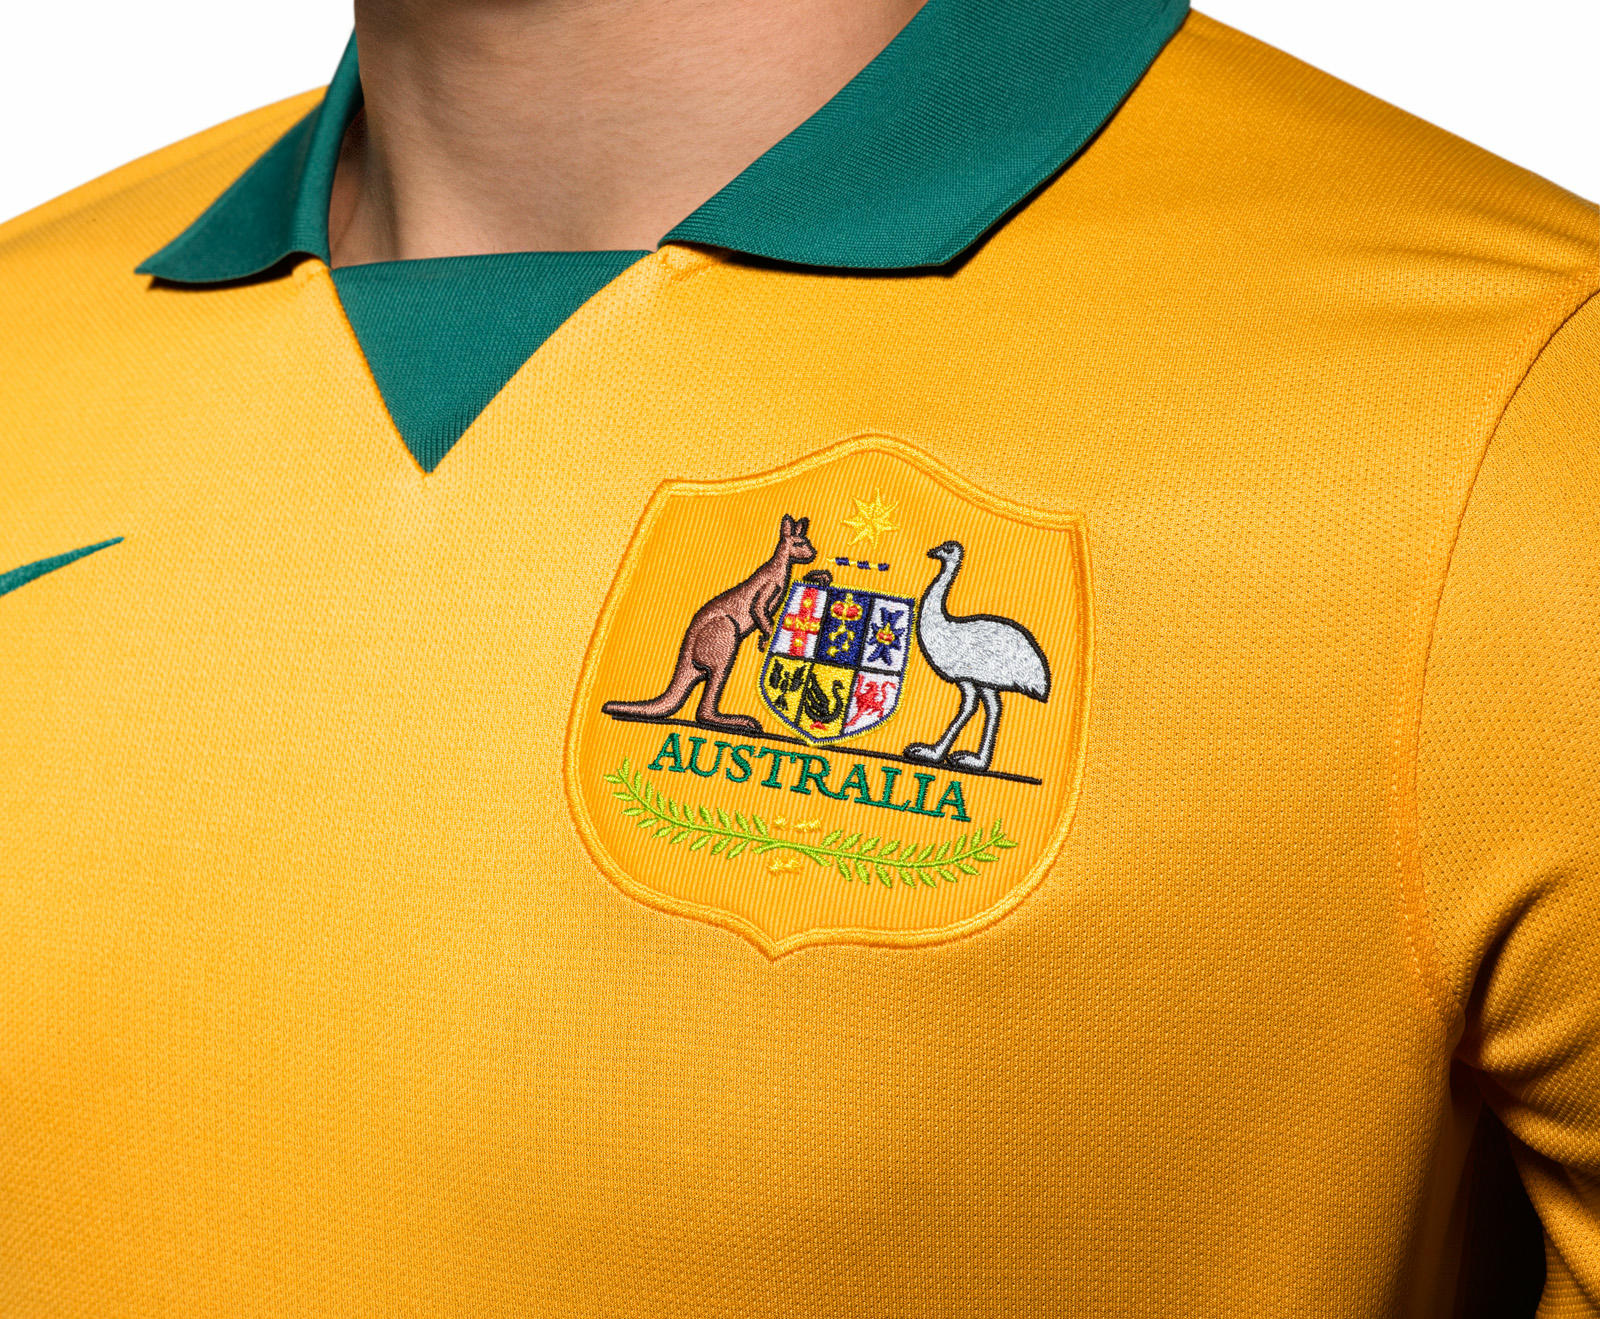 Australia 2014 Brazil World Cup